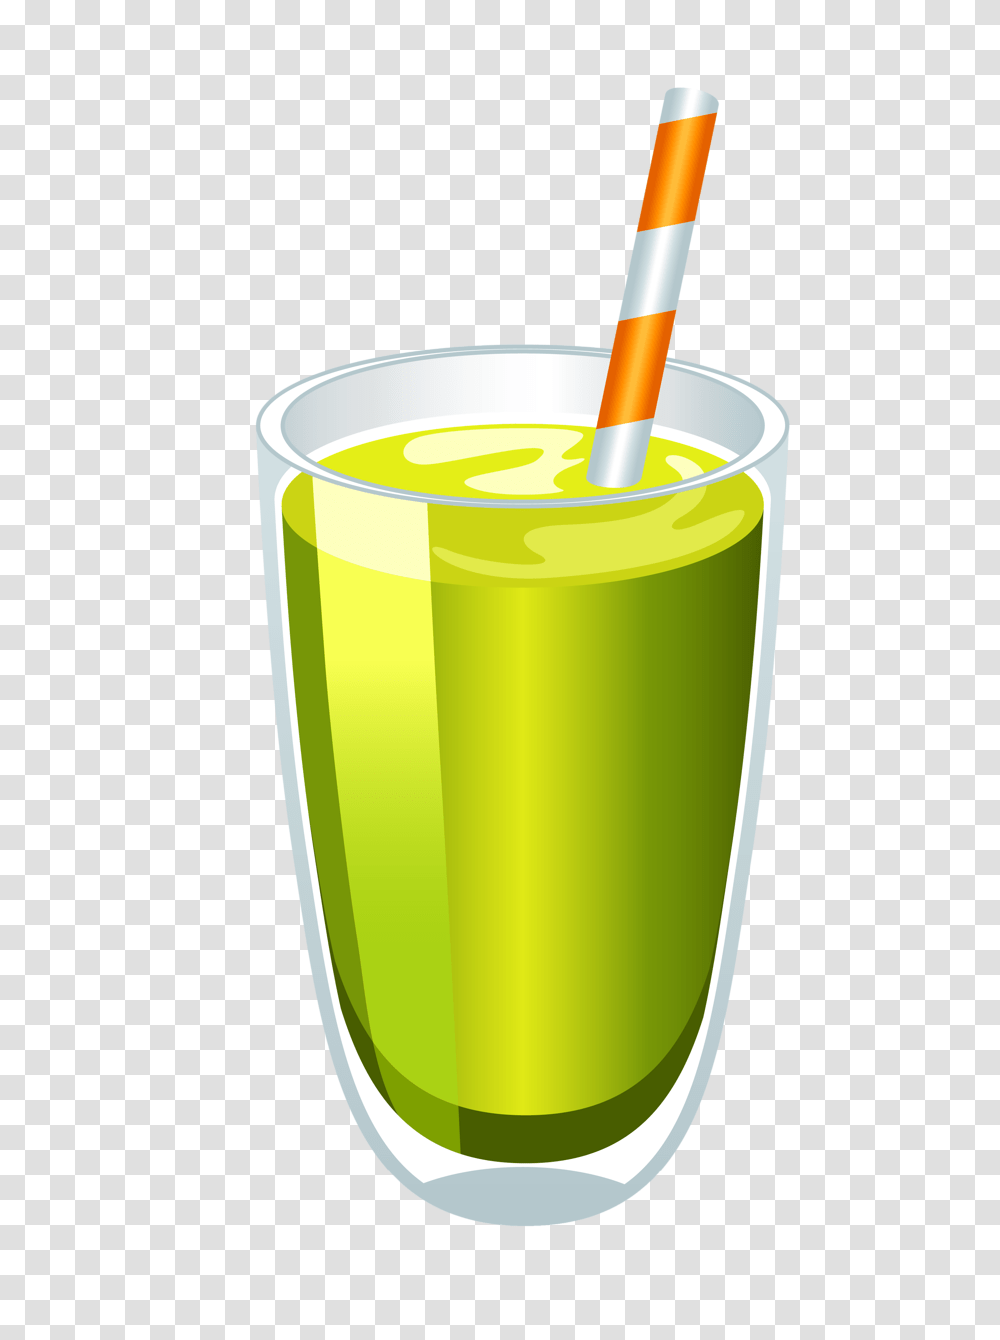 Food Clip Art Drinks Food Clips And Food, Juice, Beverage, Orange Juice, Smoothie Transparent Png